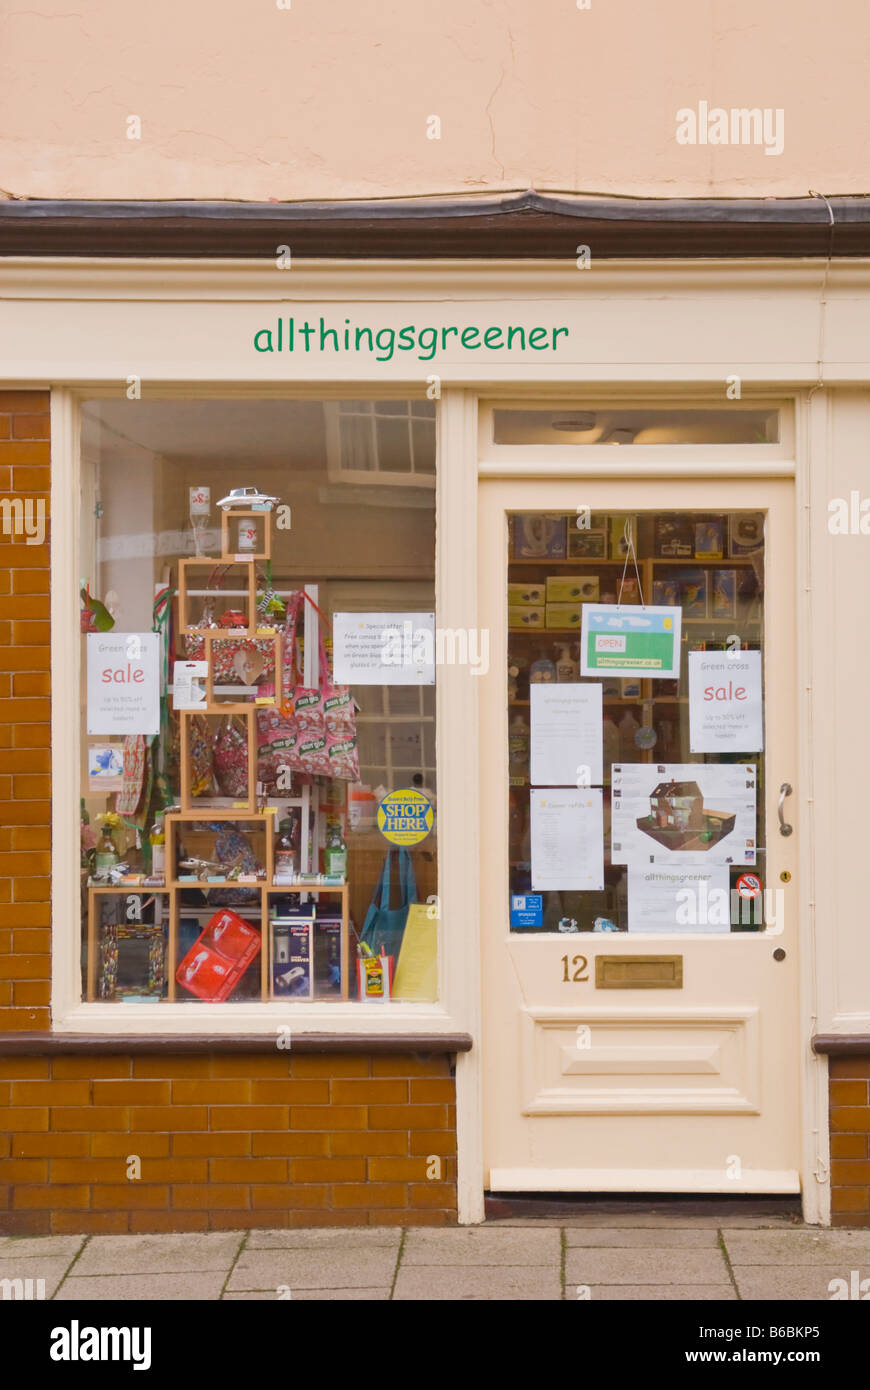 Allthingsgreener shop store selling environmentally friendly products in Harleston,Norfolk,Uk Stock Photo